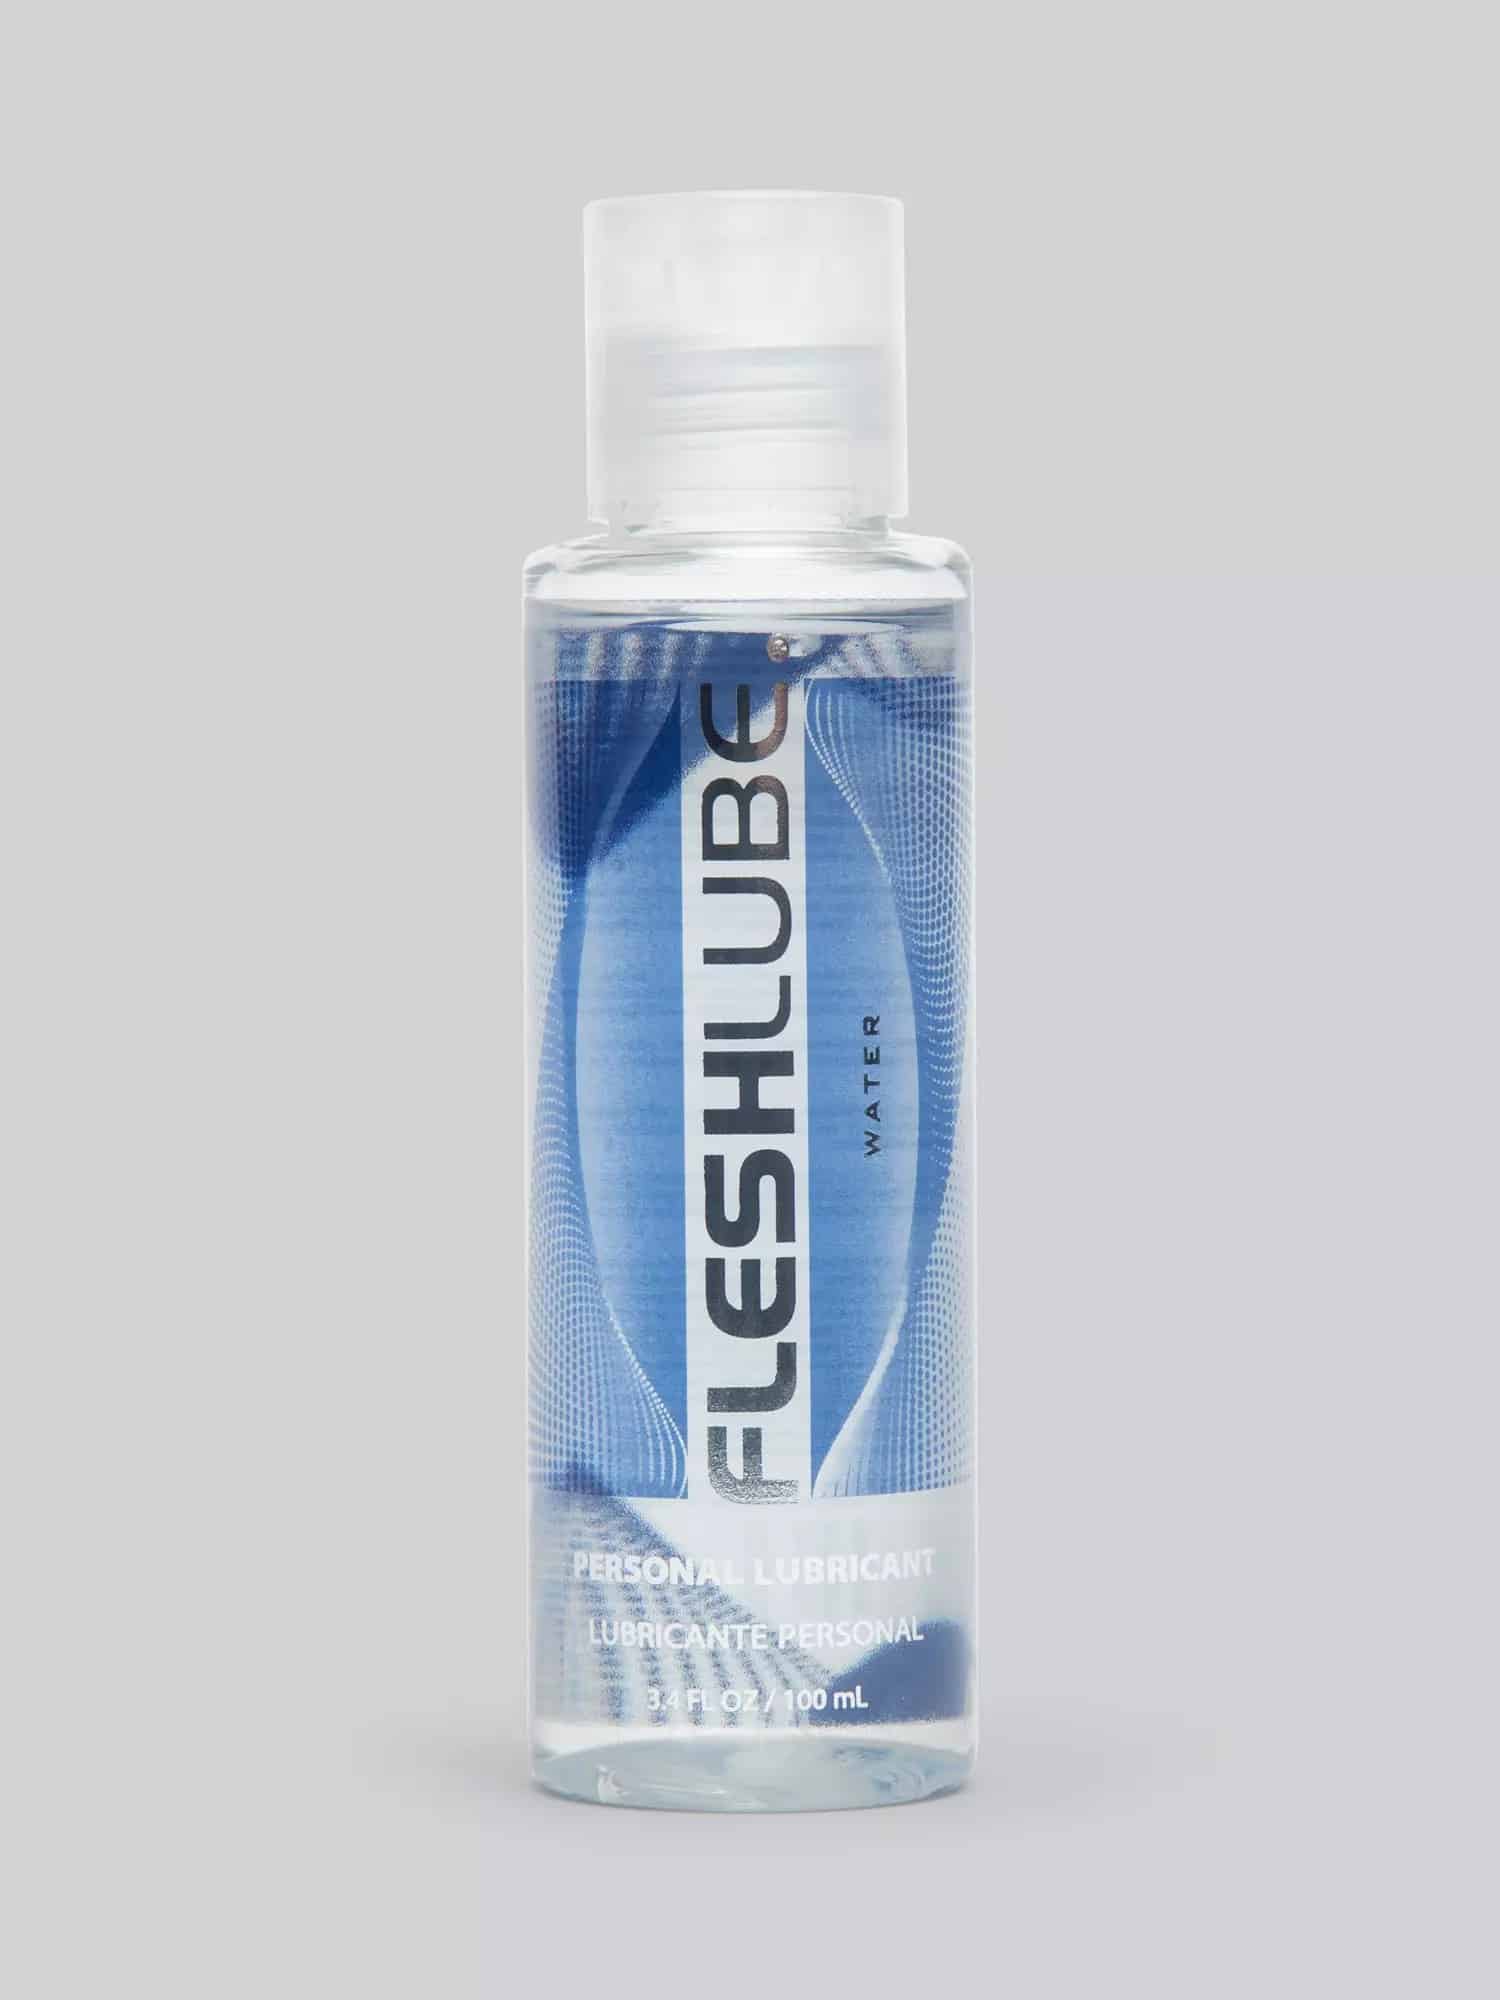 Fleshlube Water-Based Lubricant 3.38 fl oz